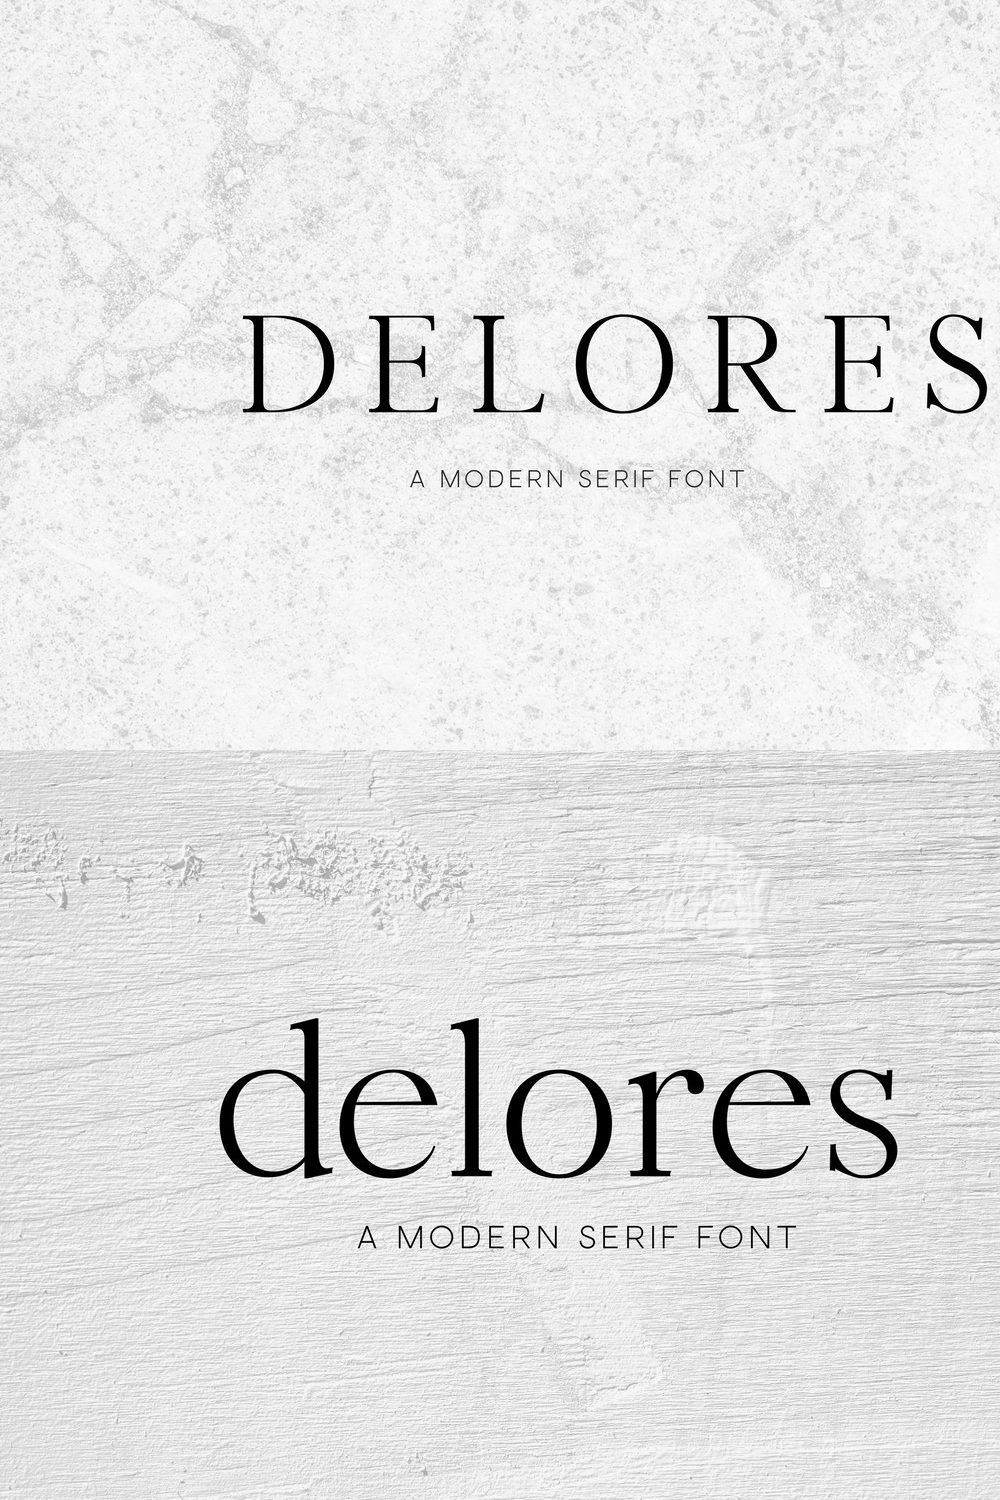 Delores - A Modern Serif Font pinterest preview image.